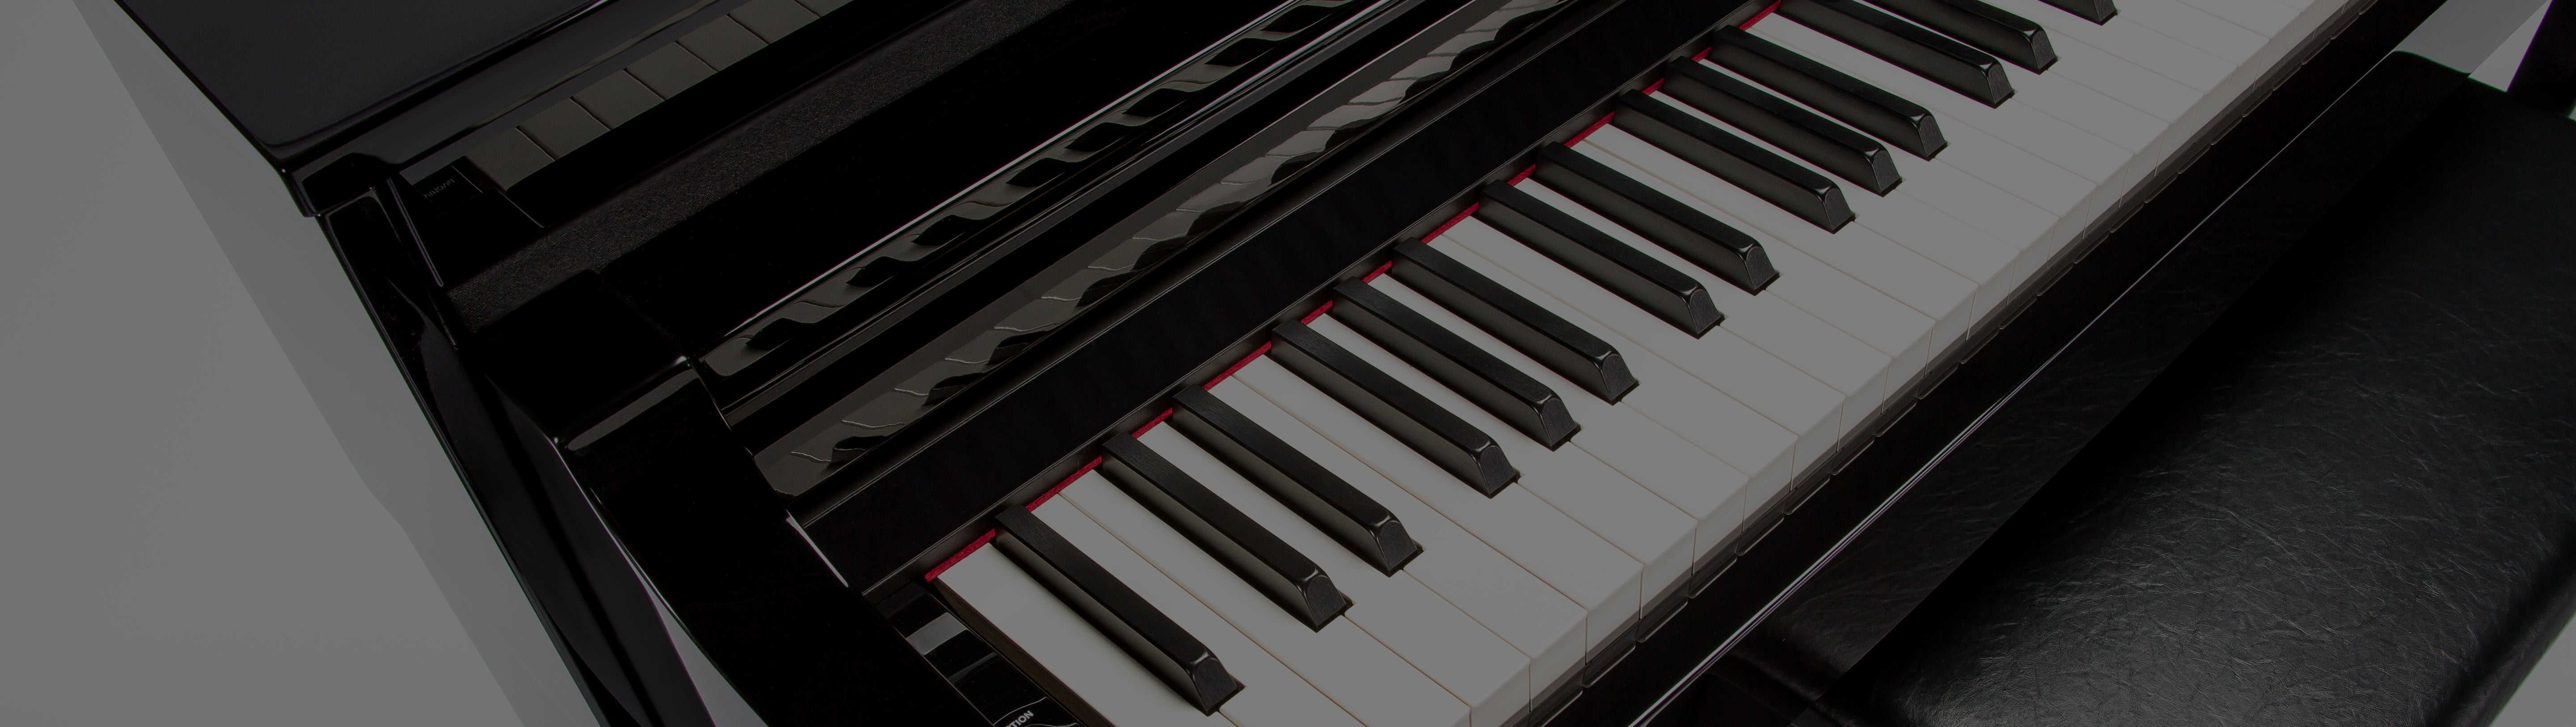 Portable Digital Pianos - Yamaha USA